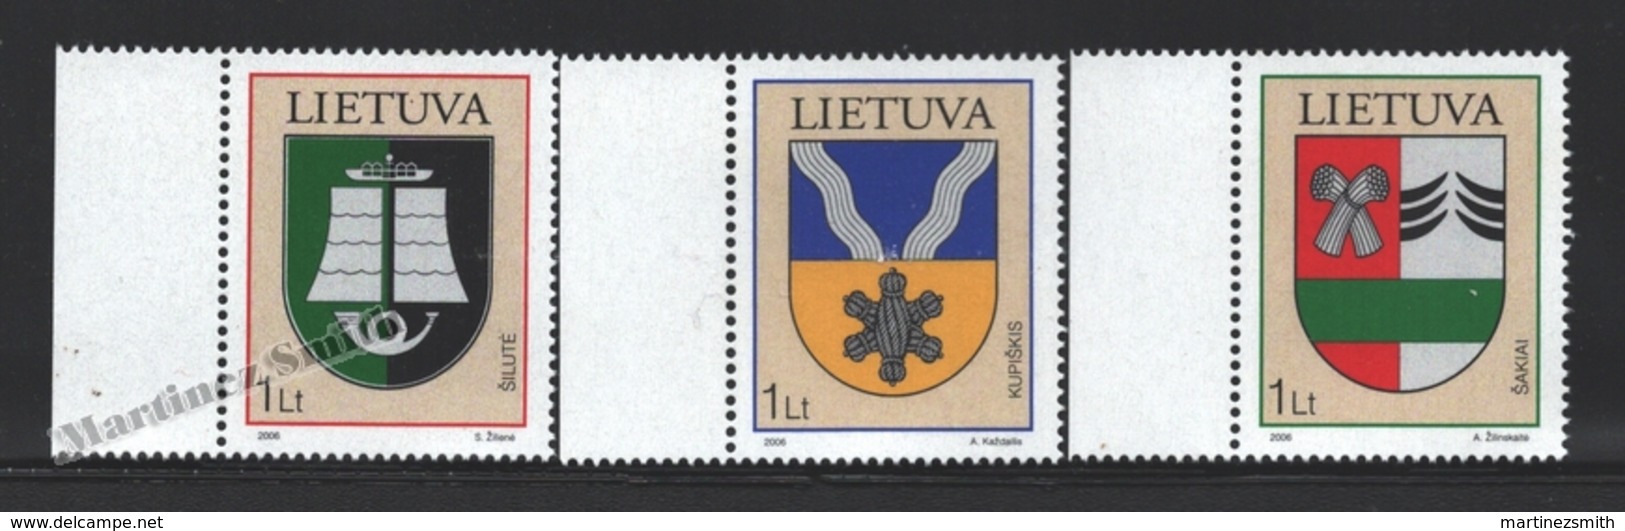 Lituanie – Lithuania – Lituania 2006 Yvert 789-91, Coat Of Arms (XV) - MNH - Lituania